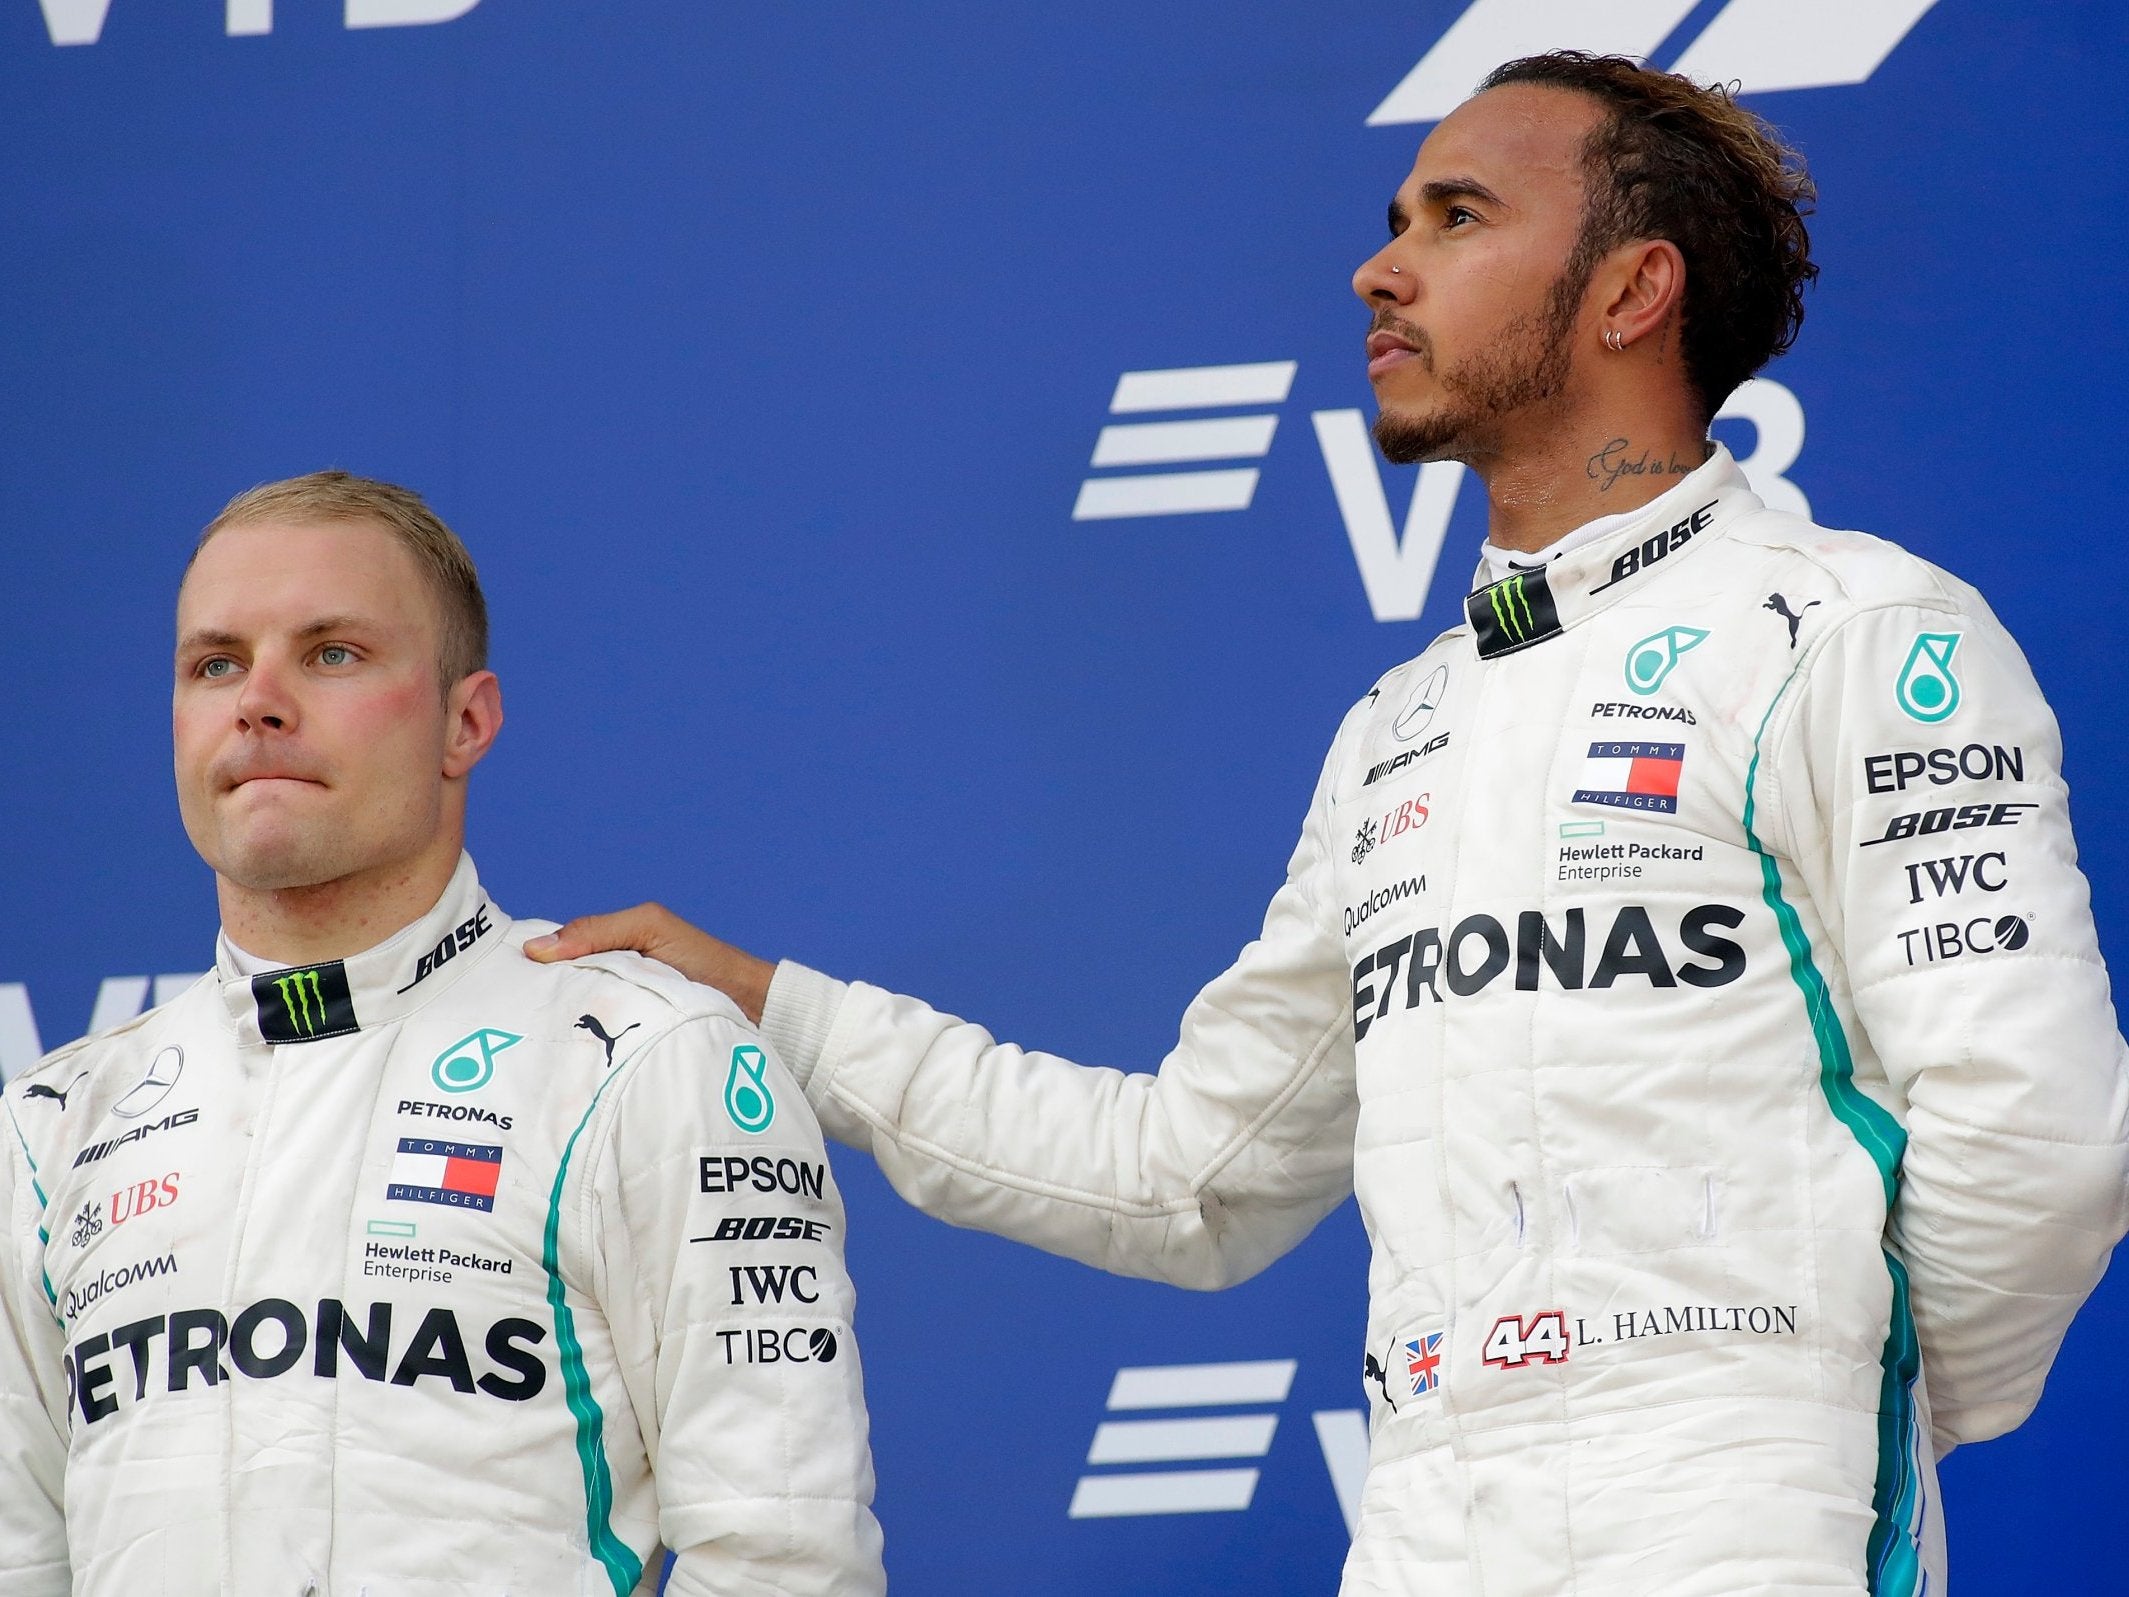 Bottas allowed Hamilton through to win the race